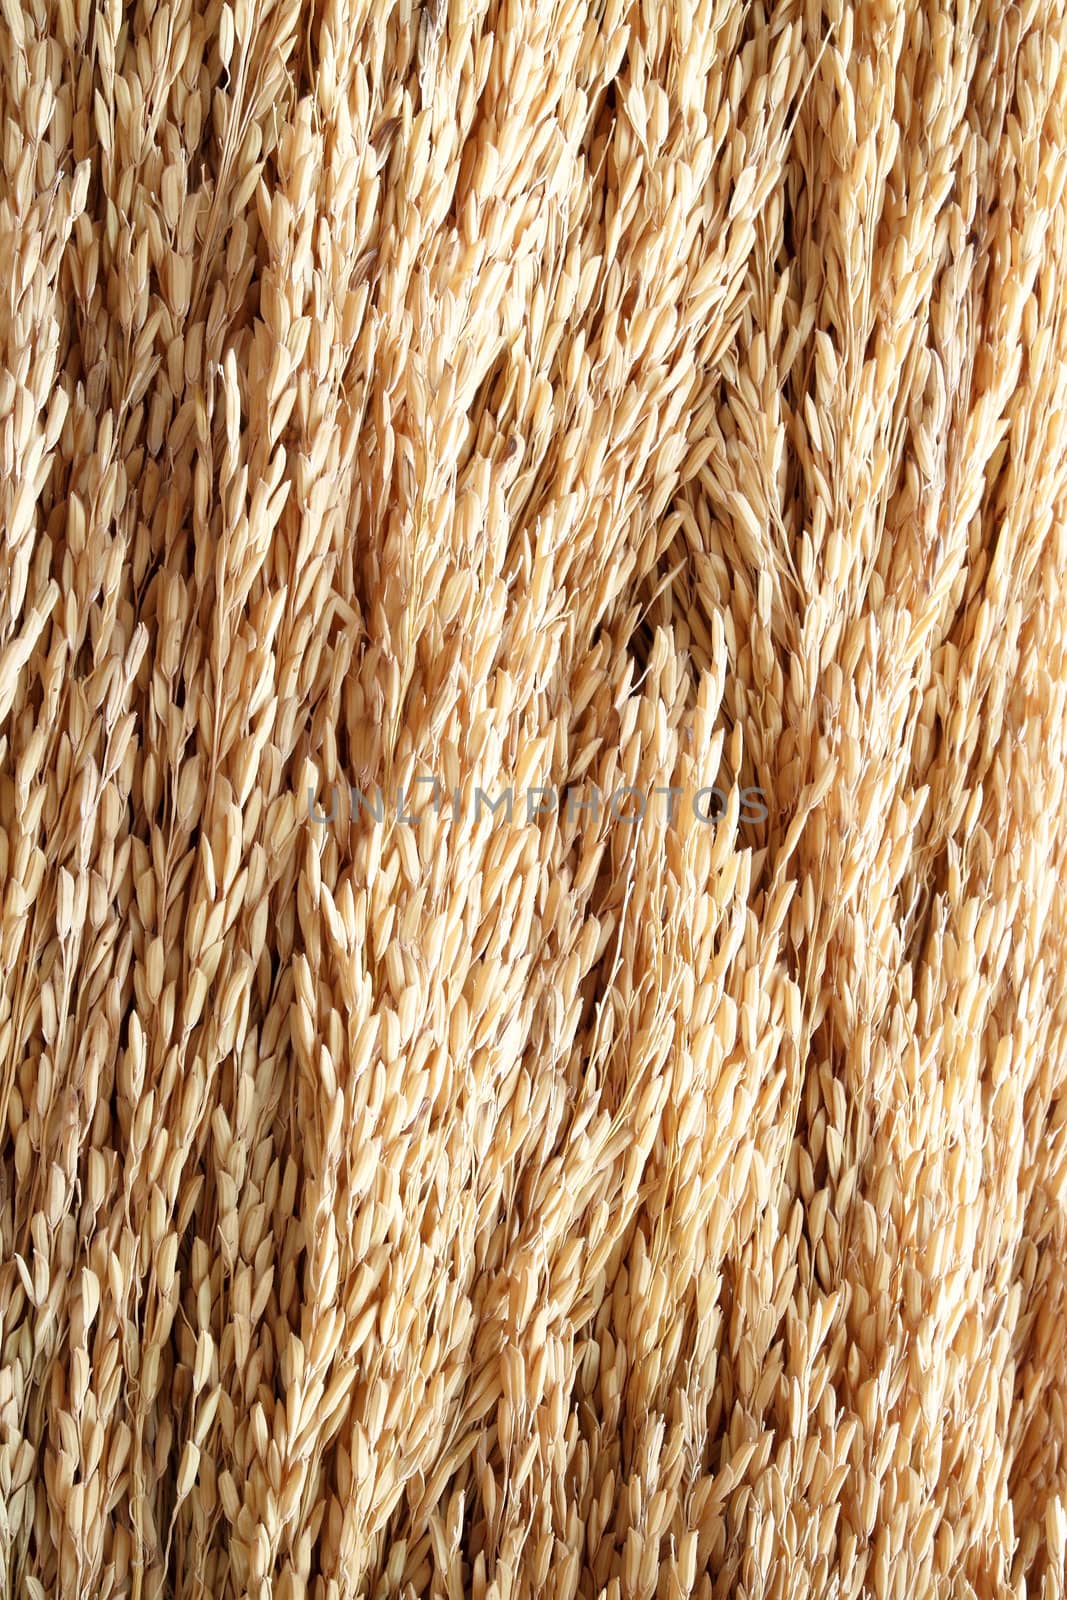 close up golden rice spikes by geargodz